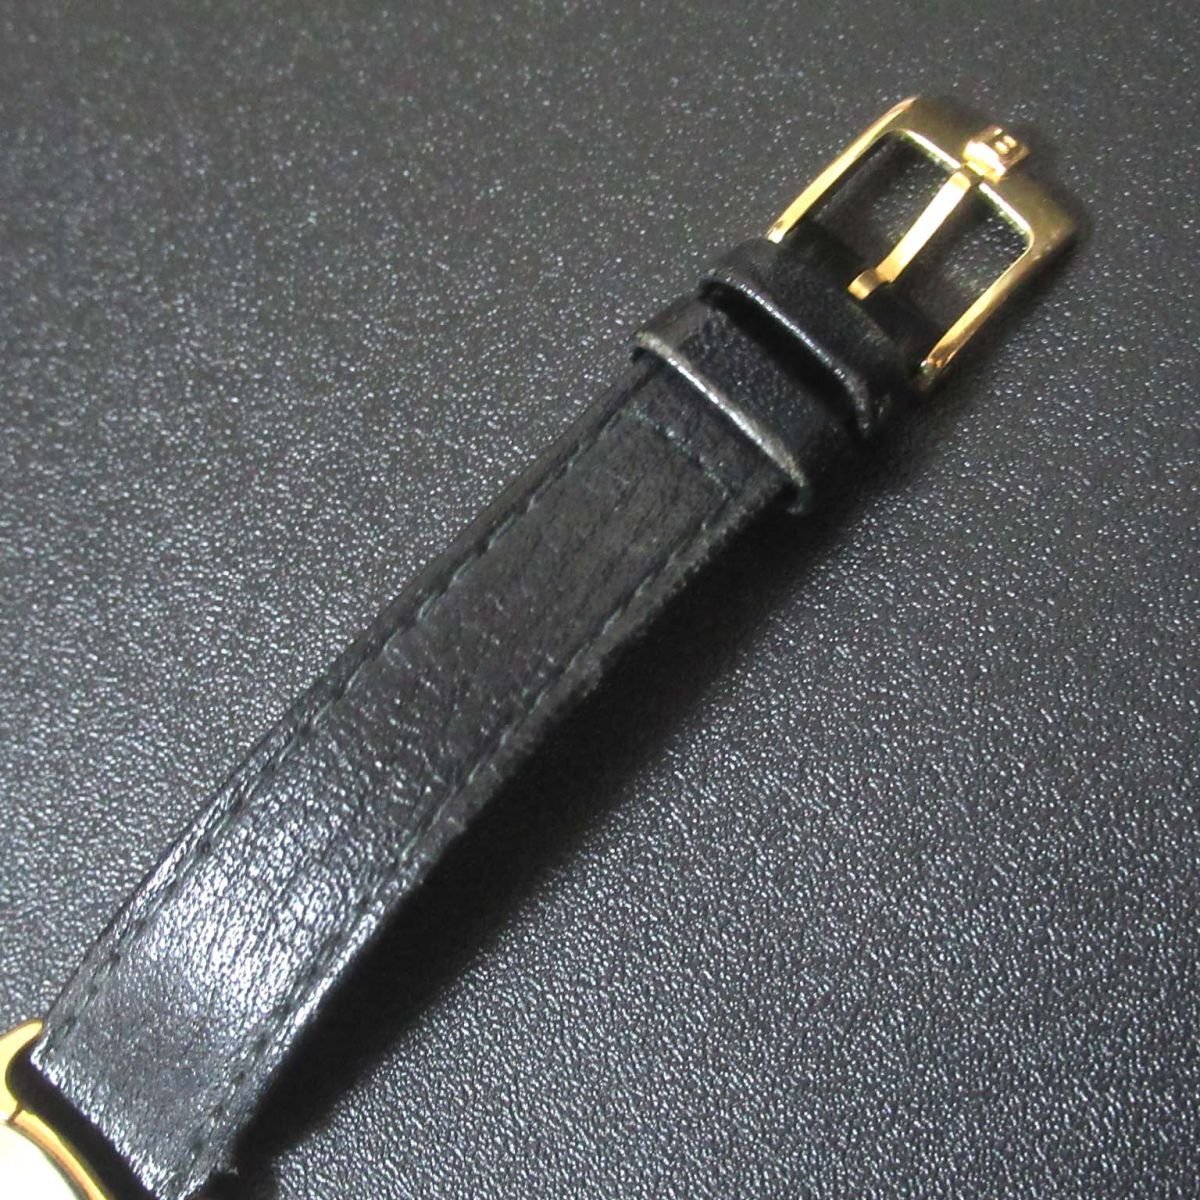  beautiful goods BALLY Bally quartz 2 hands type leather belt lady's watch wristwatch 13.01 white face × black belt 